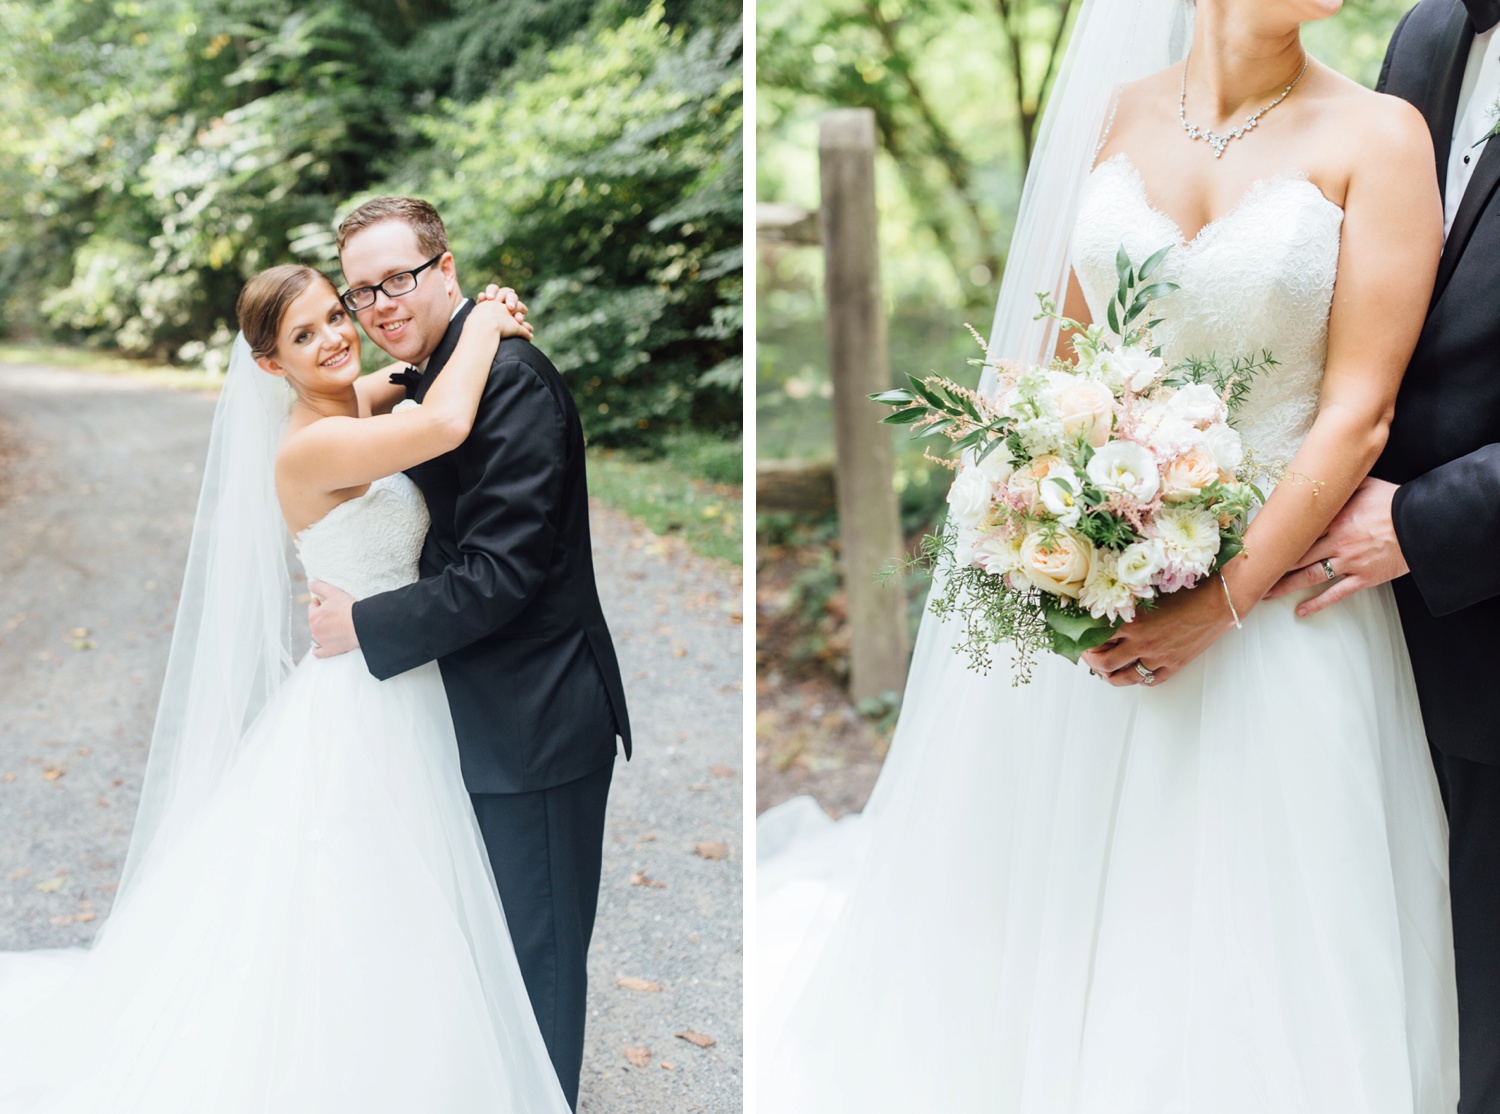 Lauren + Alec - Wissahickon Trail Wedding Portraits - Philadelphia Wedding Photographer - Alison Dunn Photography photo